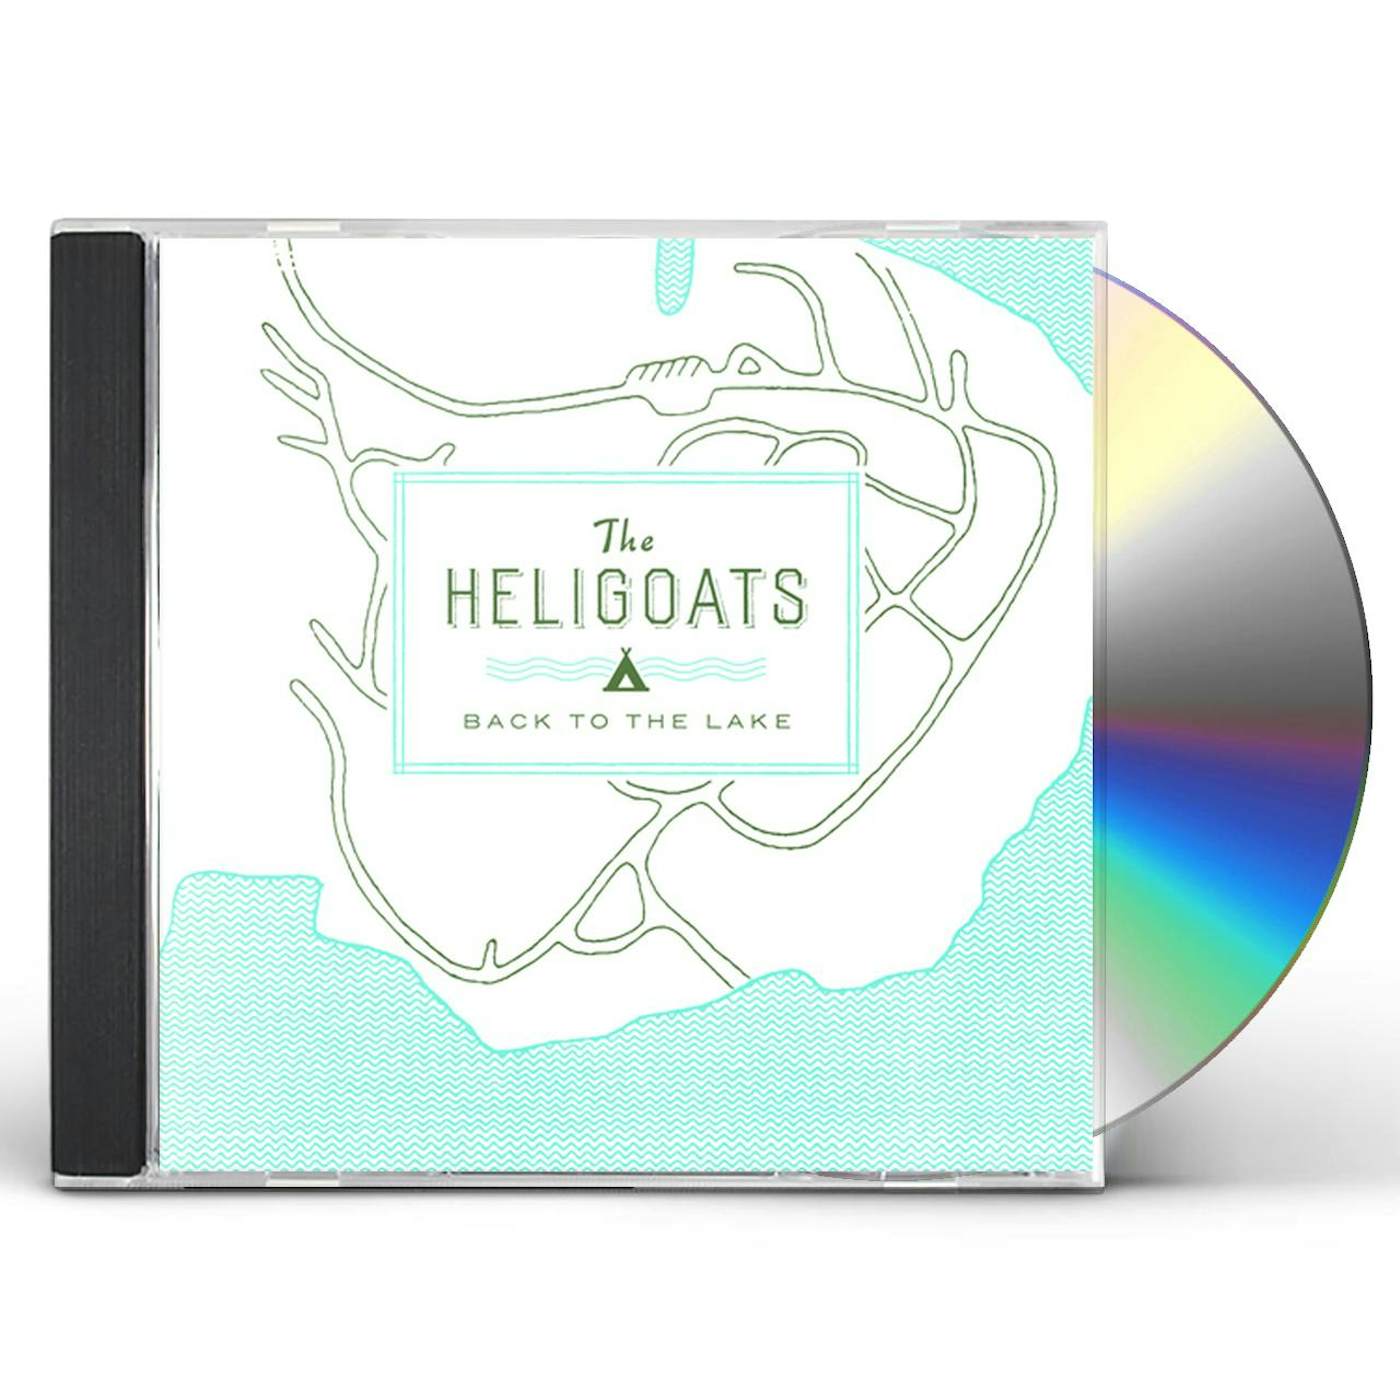 The Heligoats BACK TO THE LAKE CD